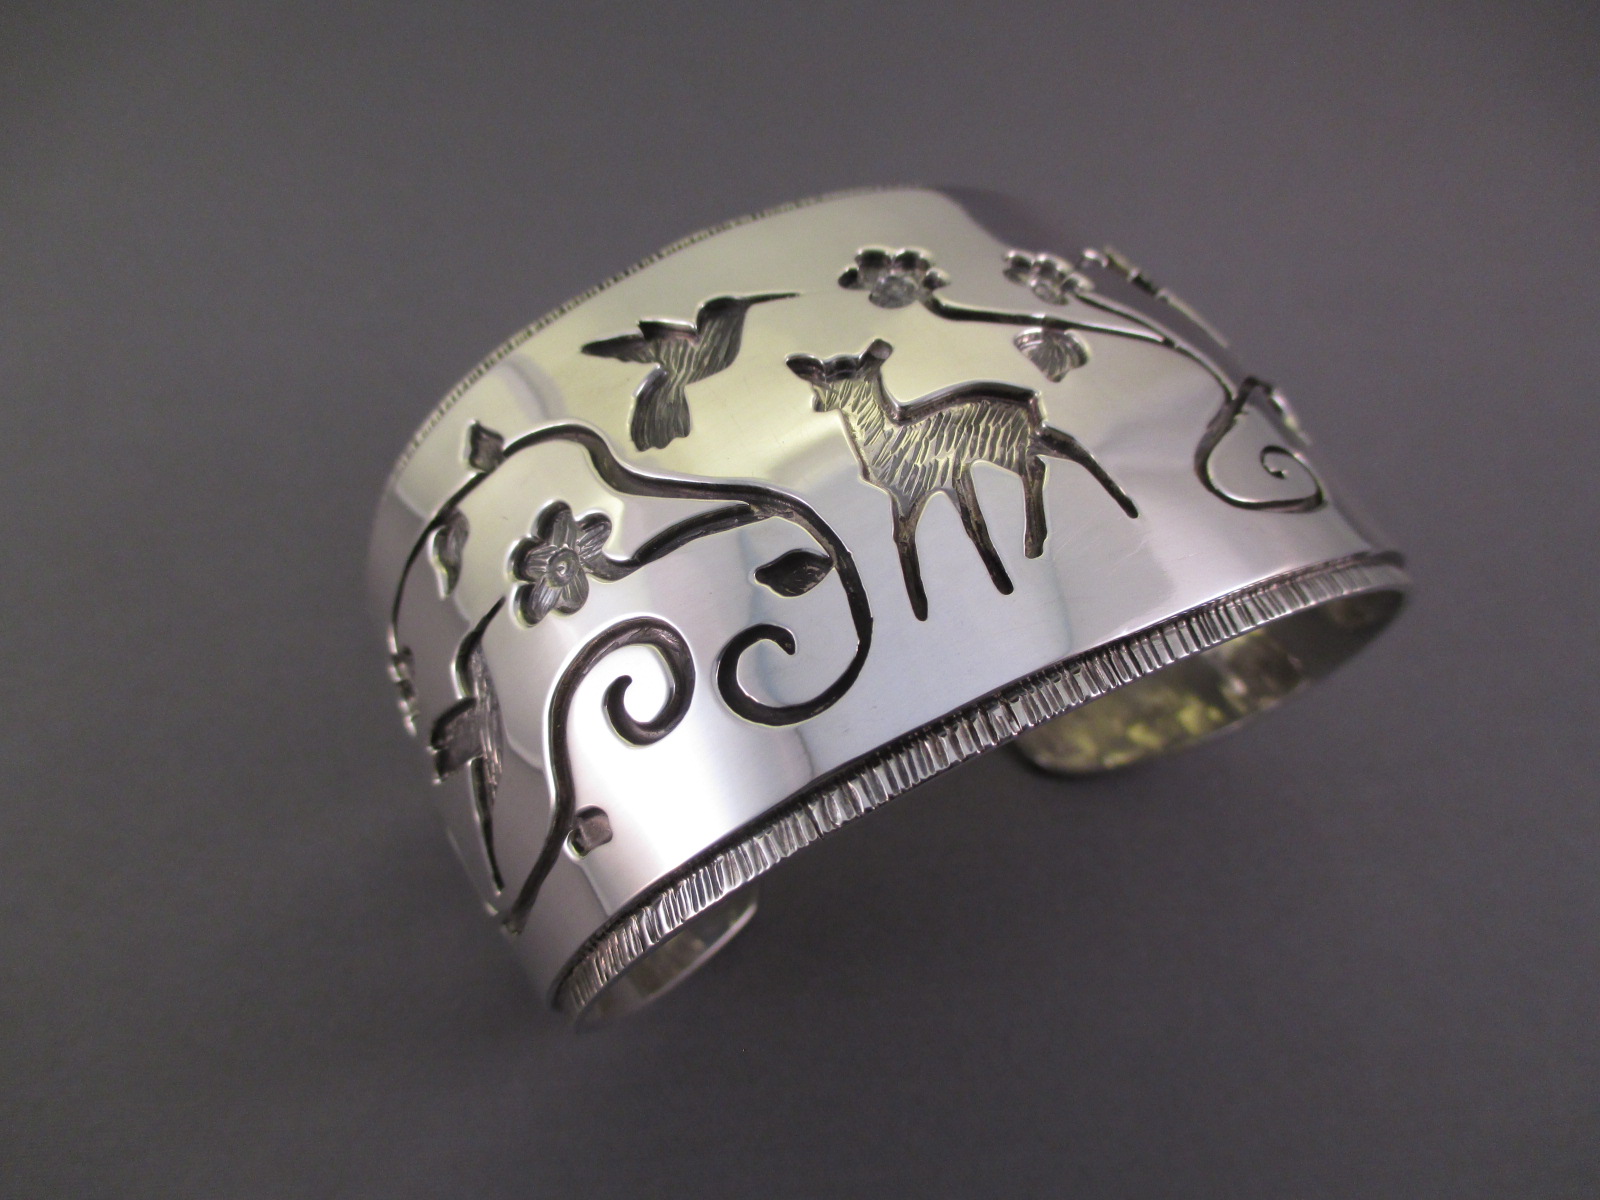 Fortune Huntinghorse Sterling Silver Cuff Bracelet – BEAUTIFUL